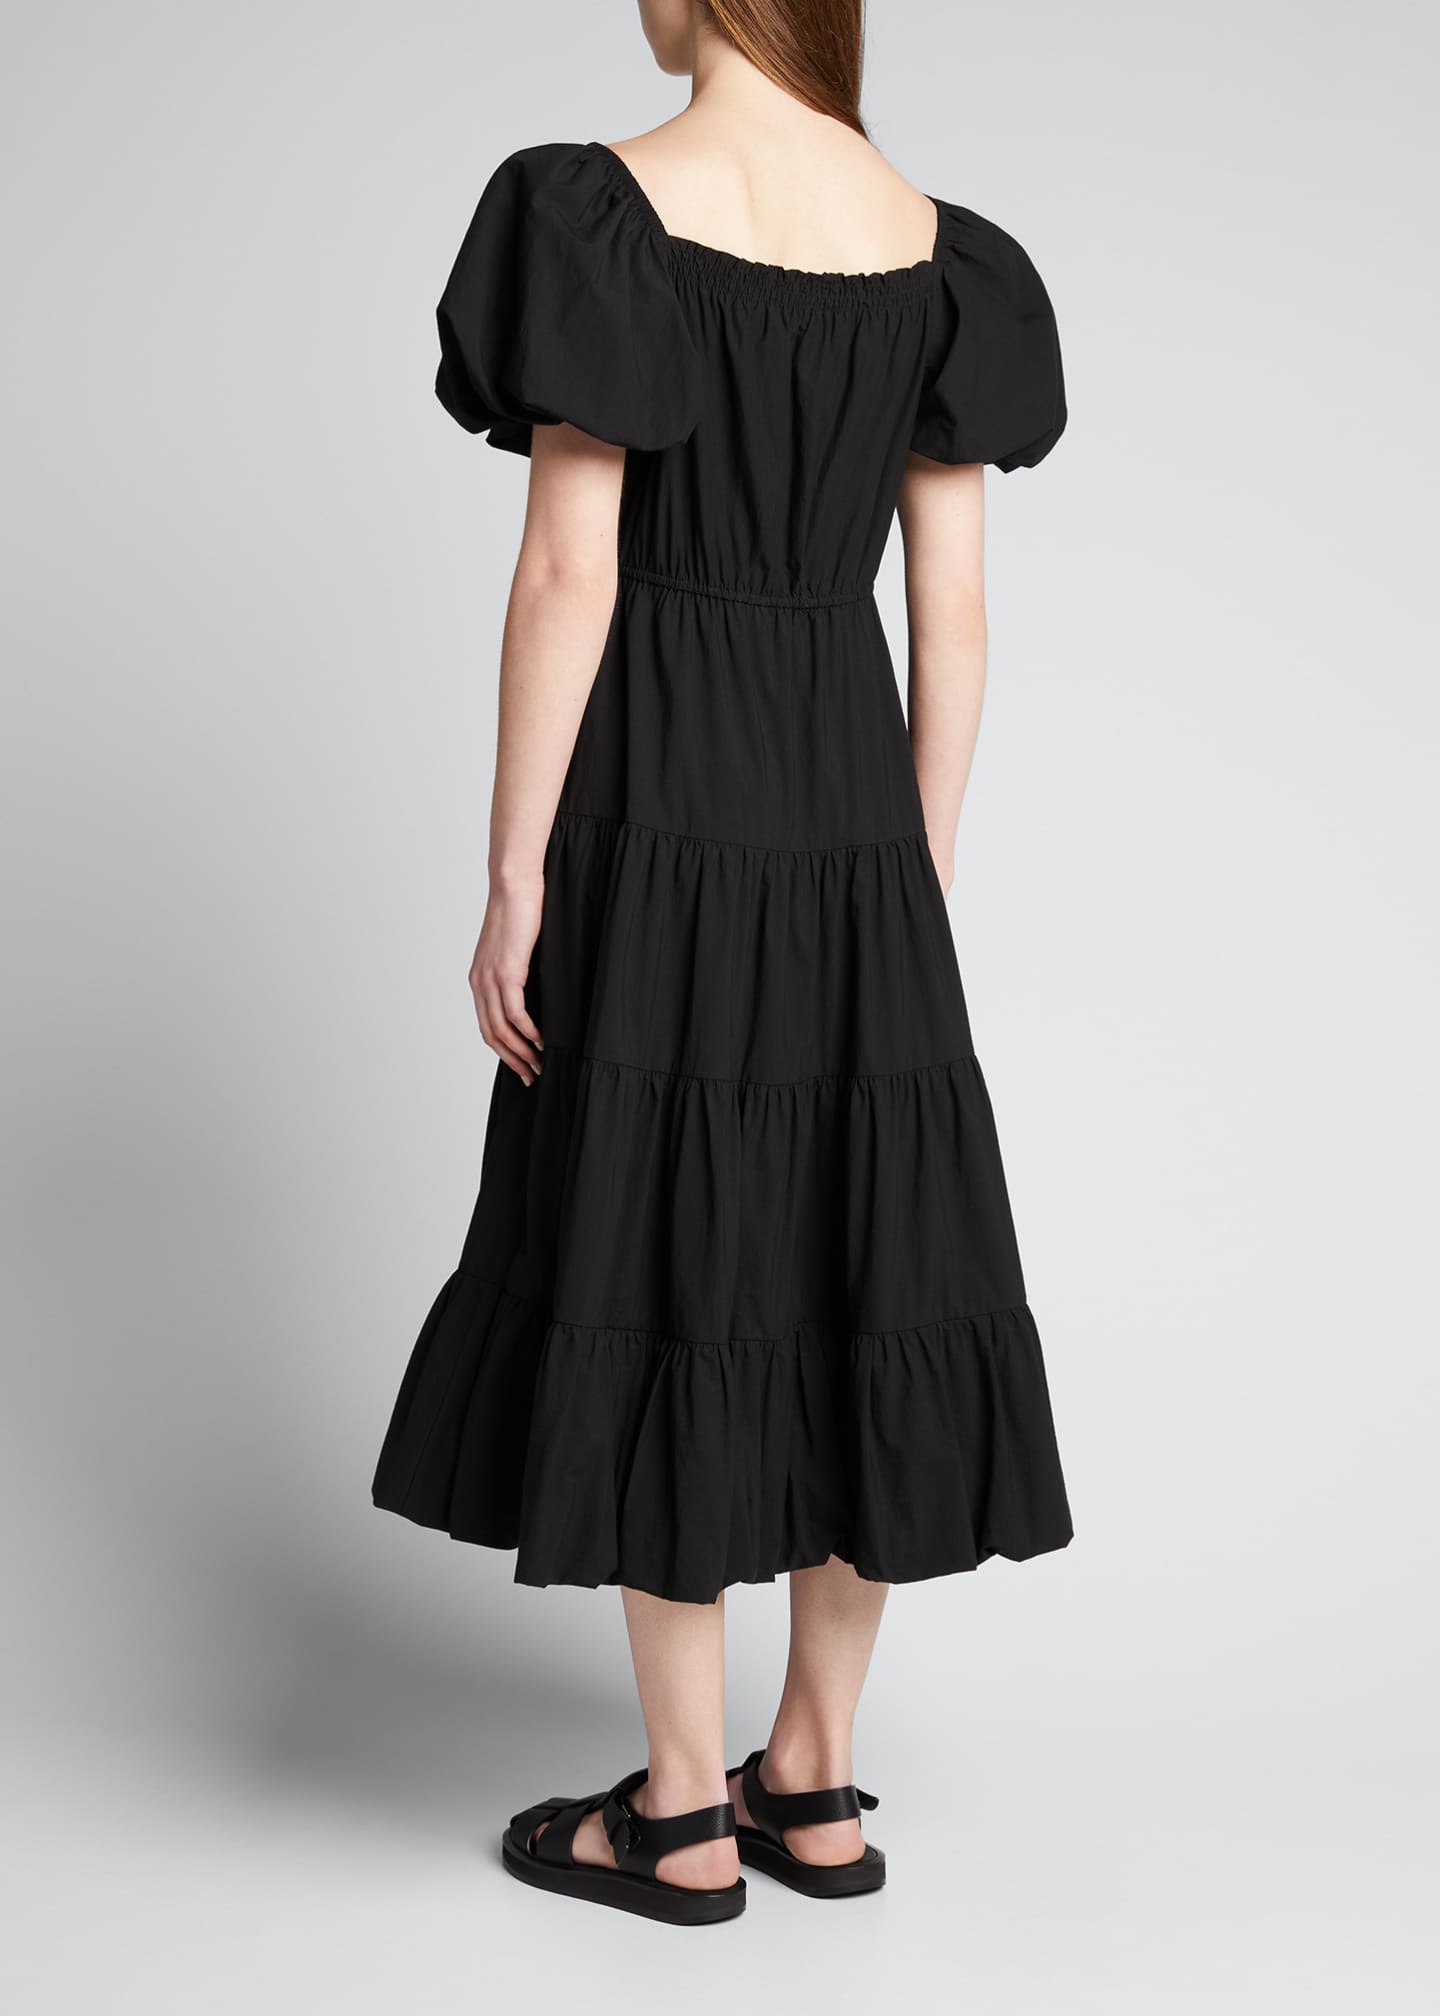 Jason Wu Off-Shoulder Puff-Sleeve Tiered Dress - Bergdorf Goodman